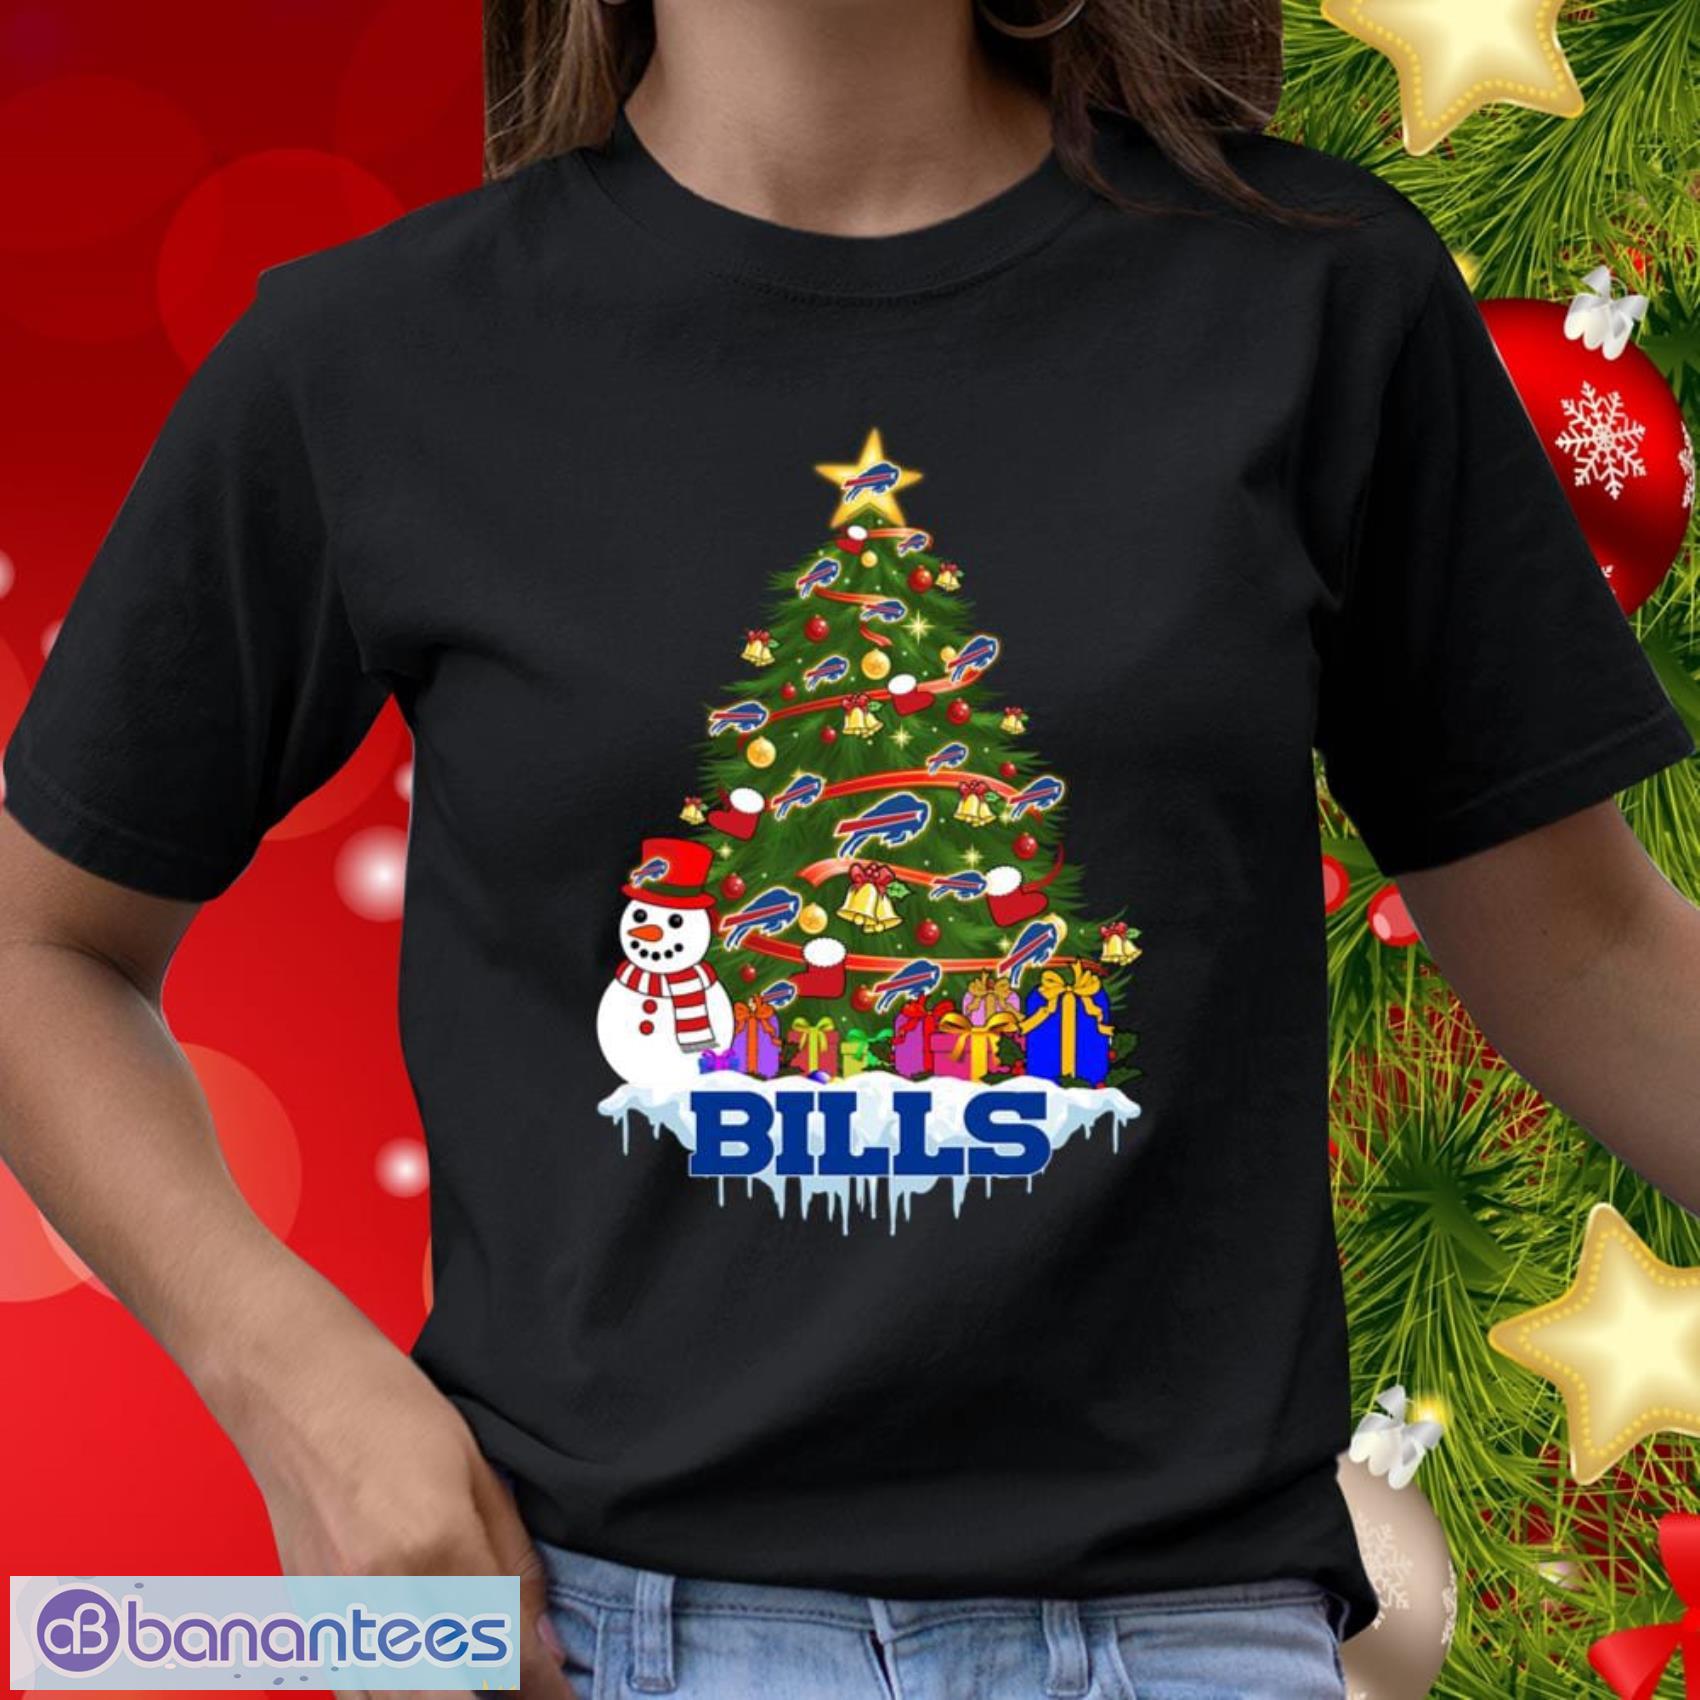 Buffalo Bills Merry Christmas NFL Football Gift Fr Fans Sports T Shirt - Buffalo Bills Merry Christmas NFL Football Sports T Shirt_2